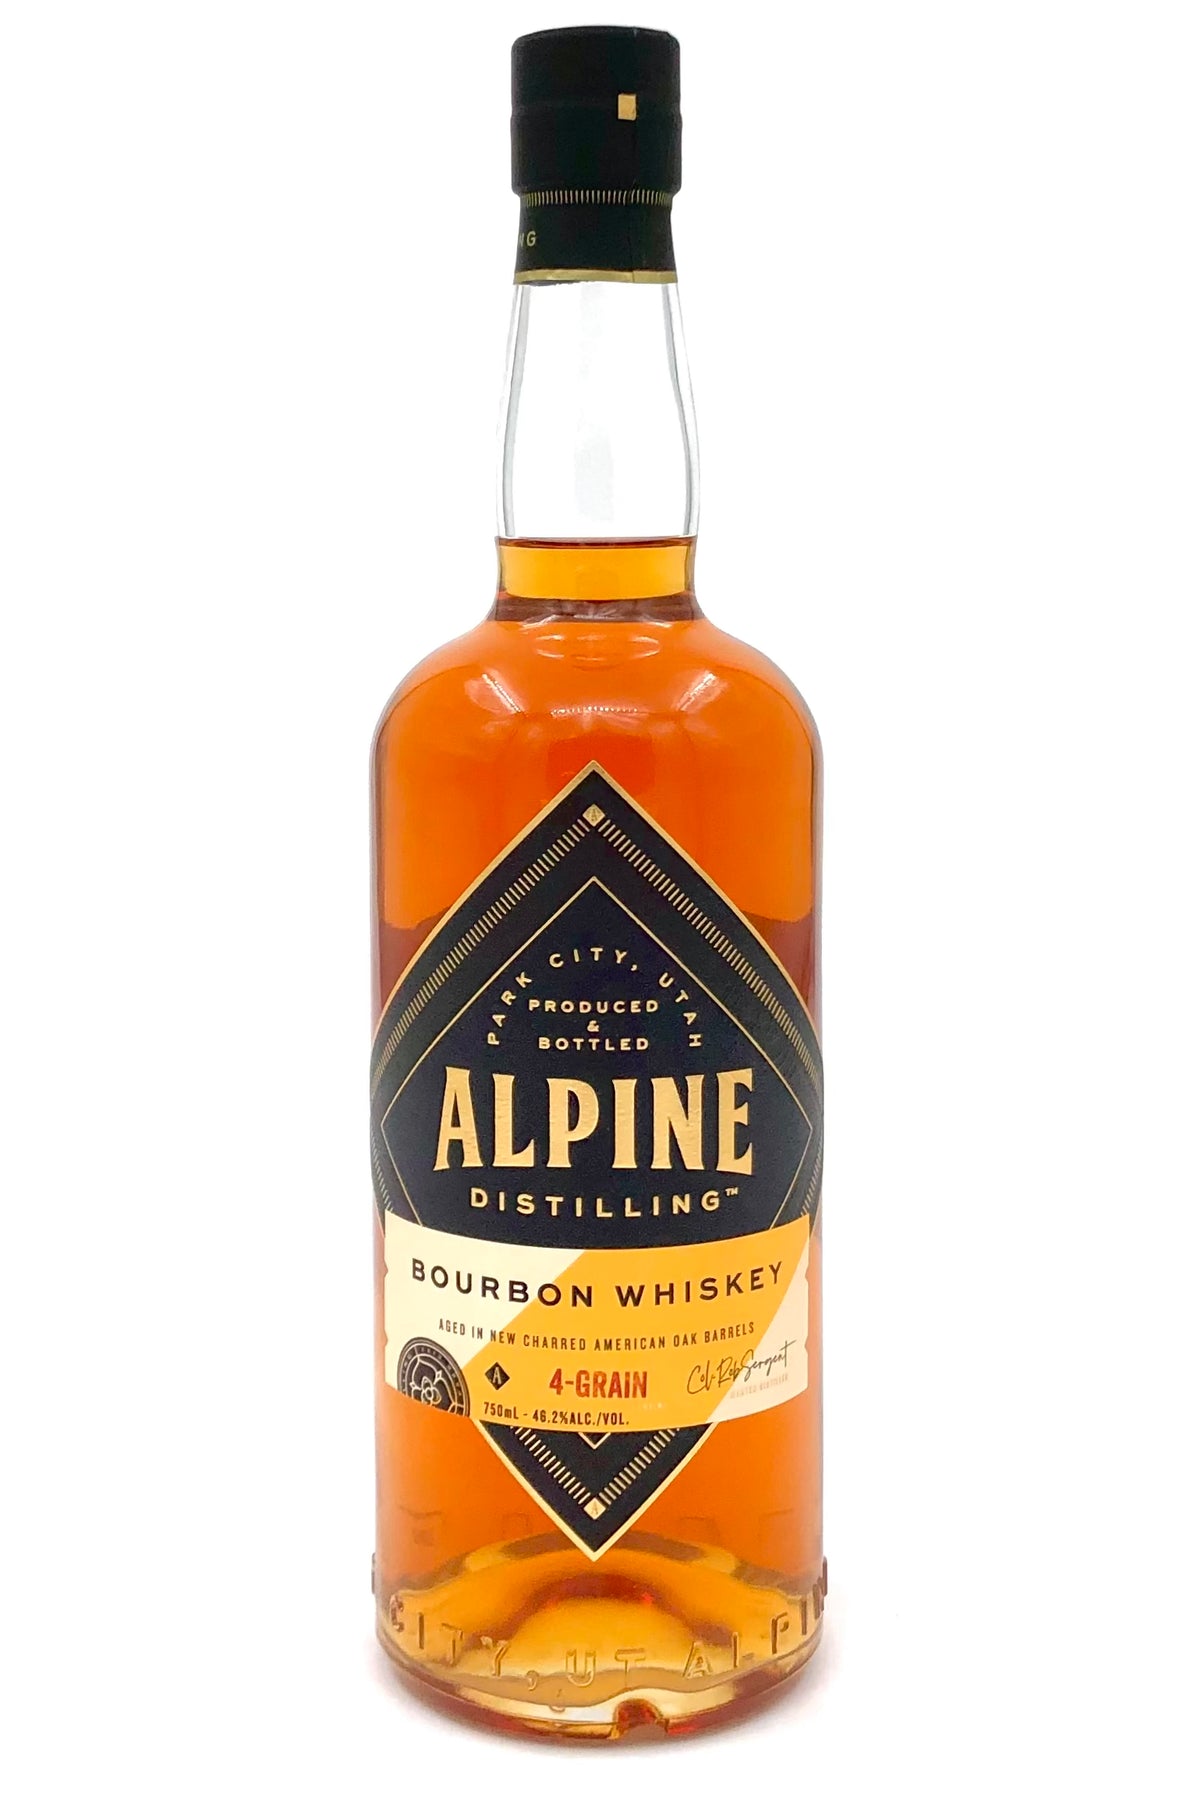 Alpine Bourbon Whiskey